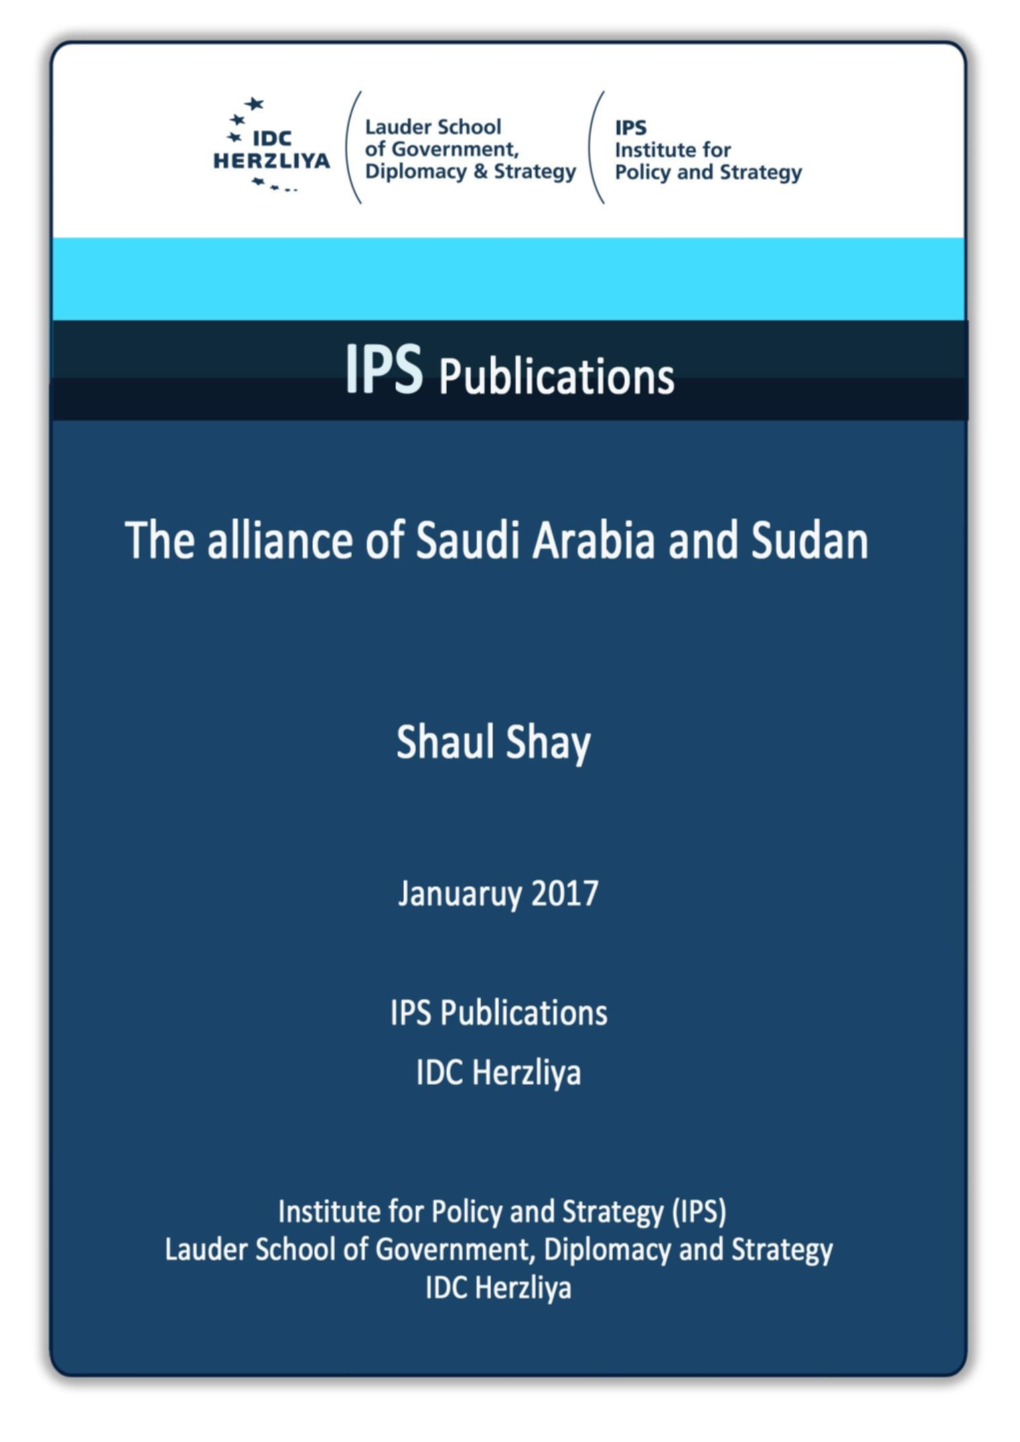 The Alliance of Saudi Arabia and Sudan